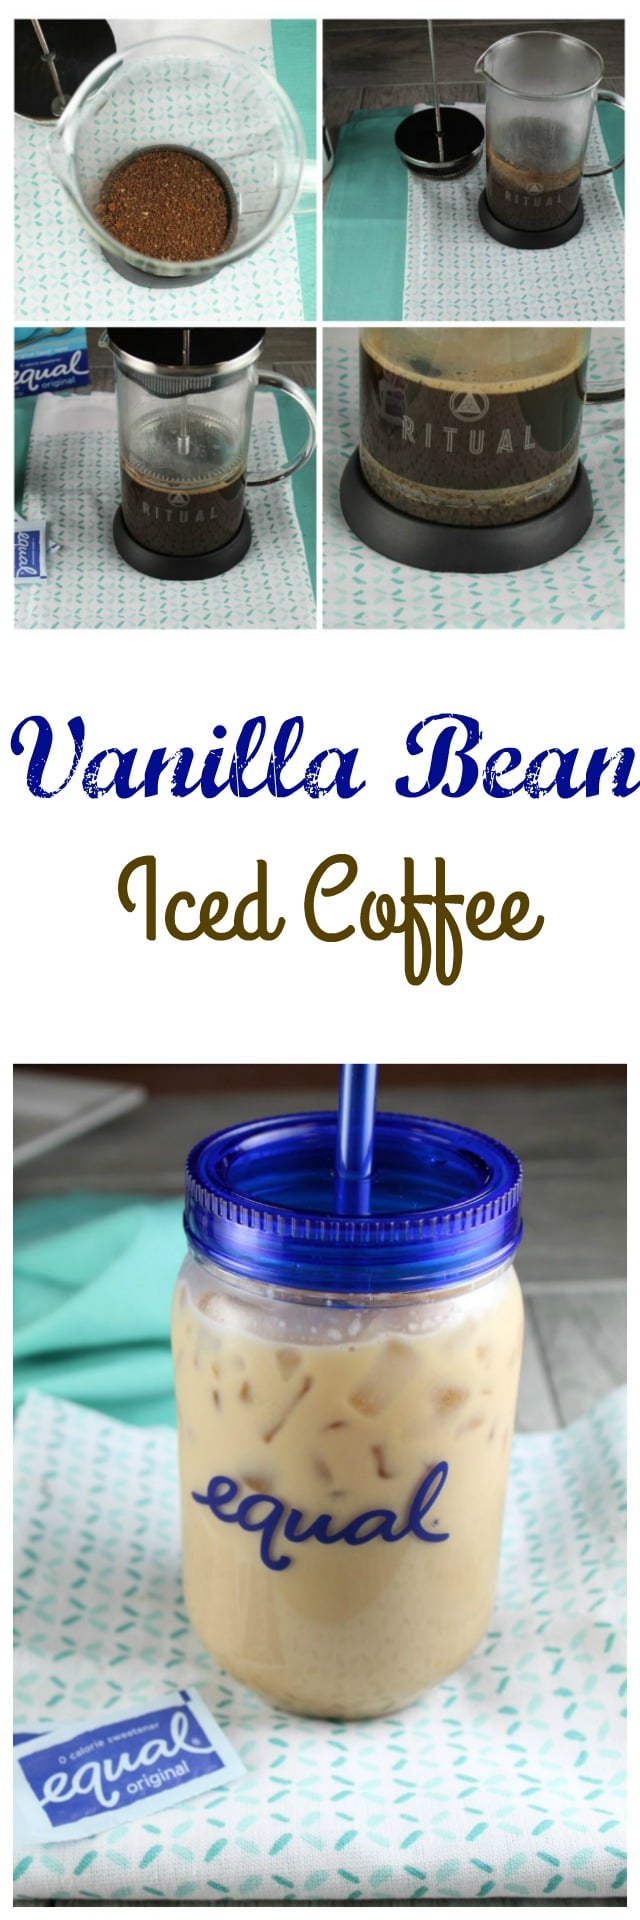 Vanilla Bean Iced Coffee Recipe from missinthekitchen.com #sponsored